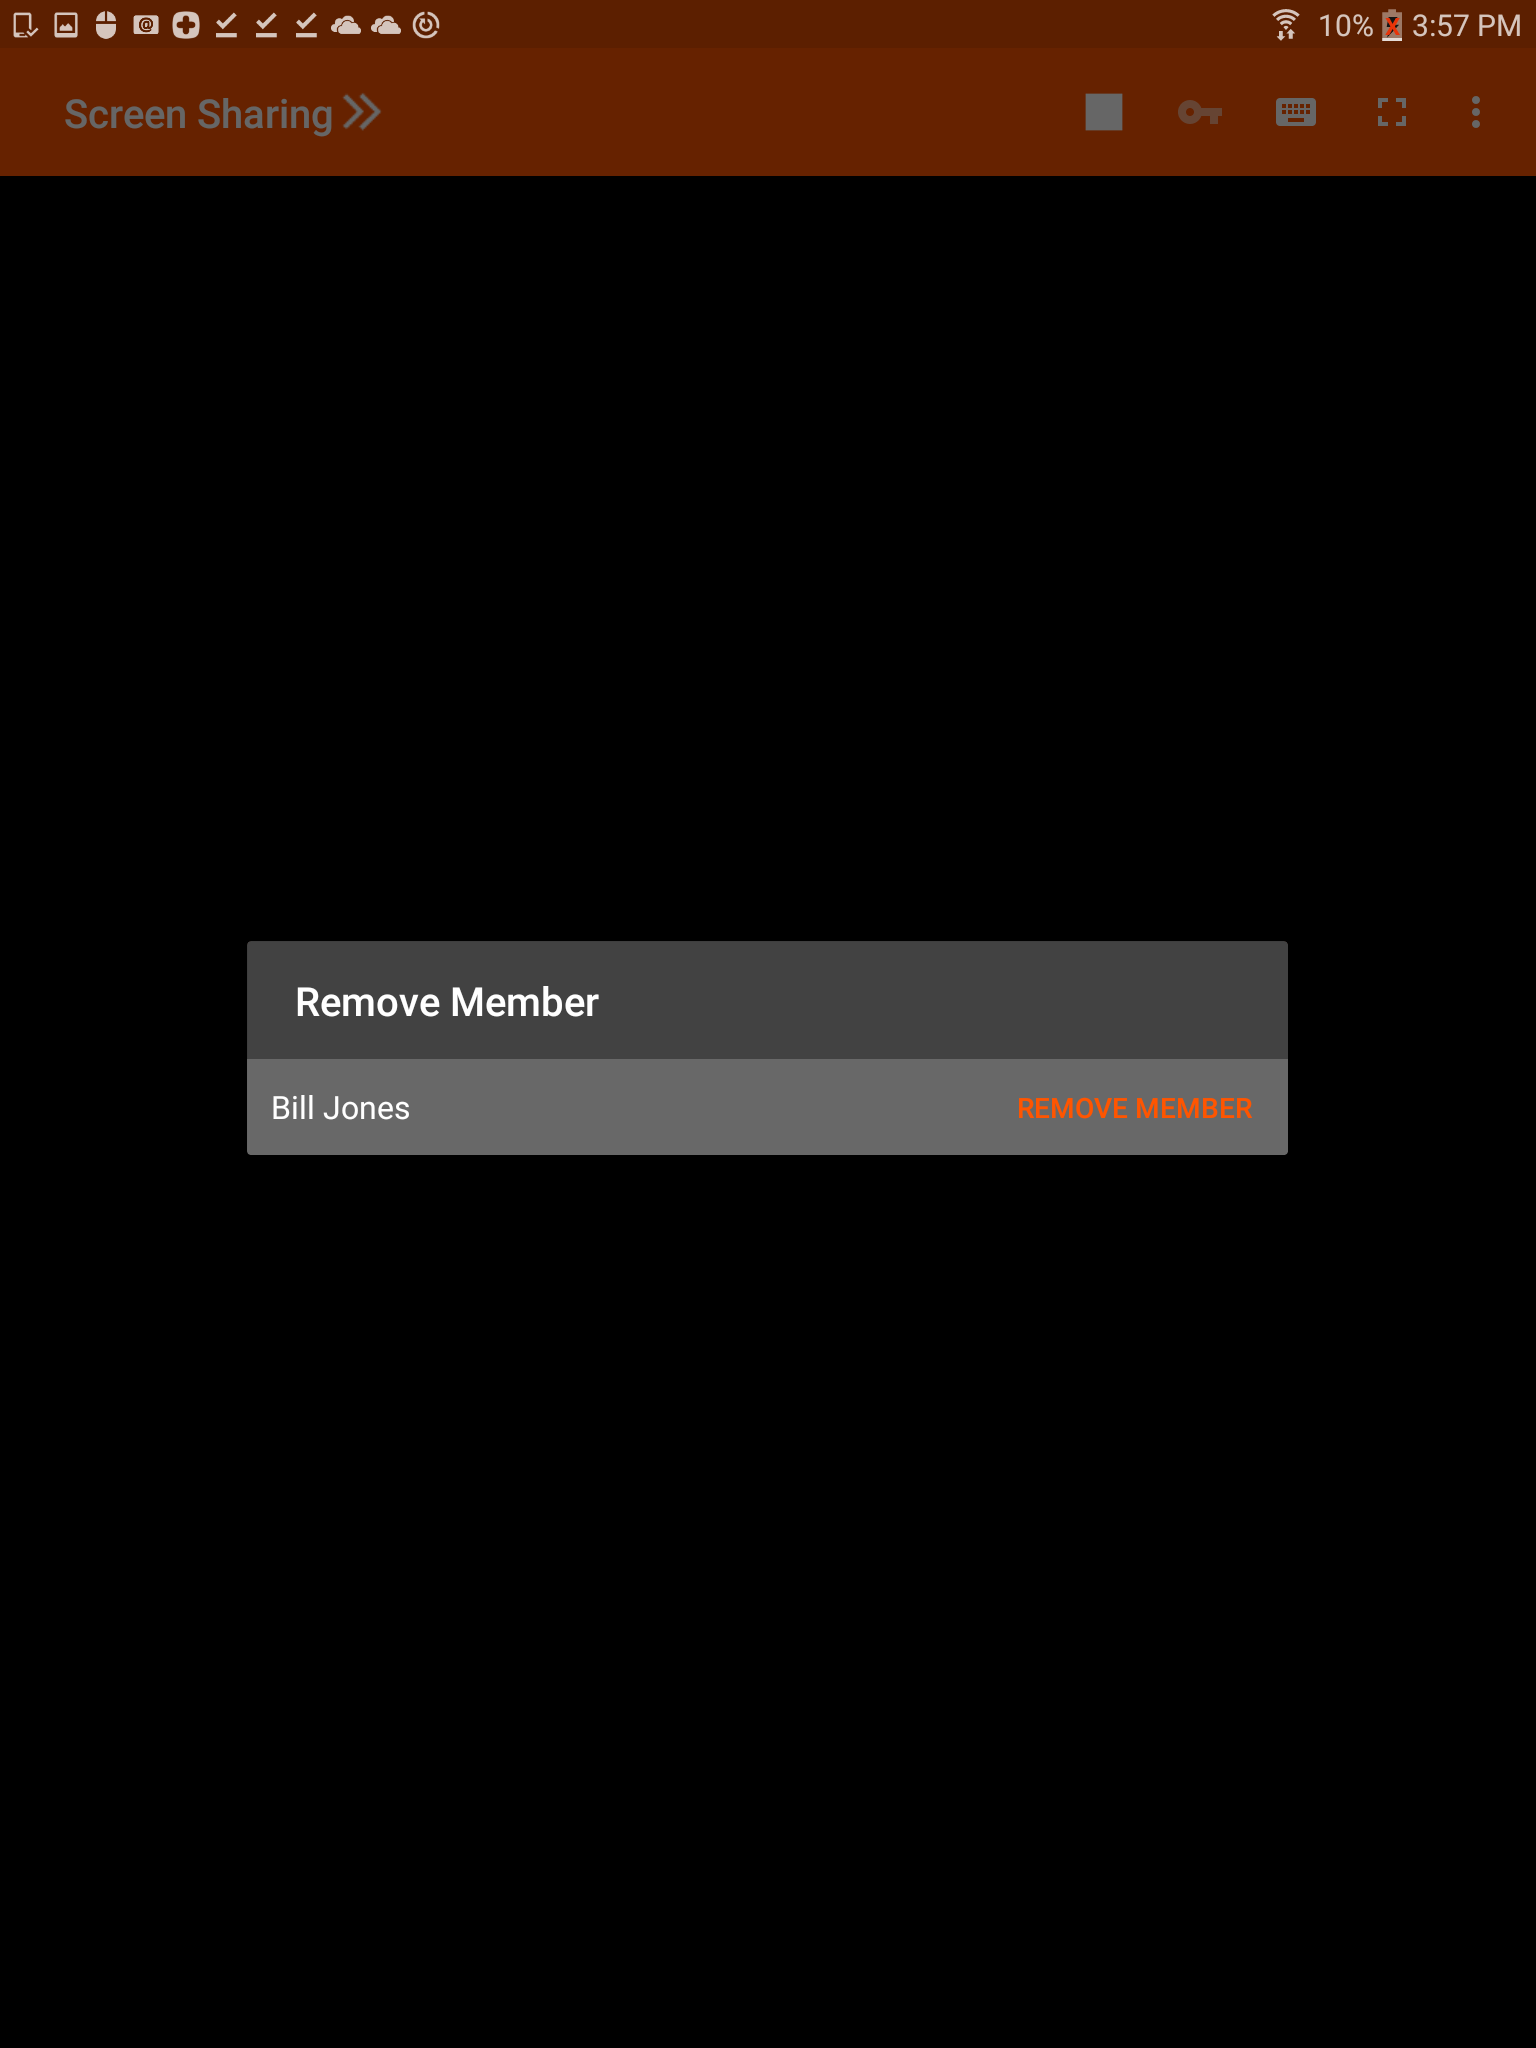 Remove Member Prompt